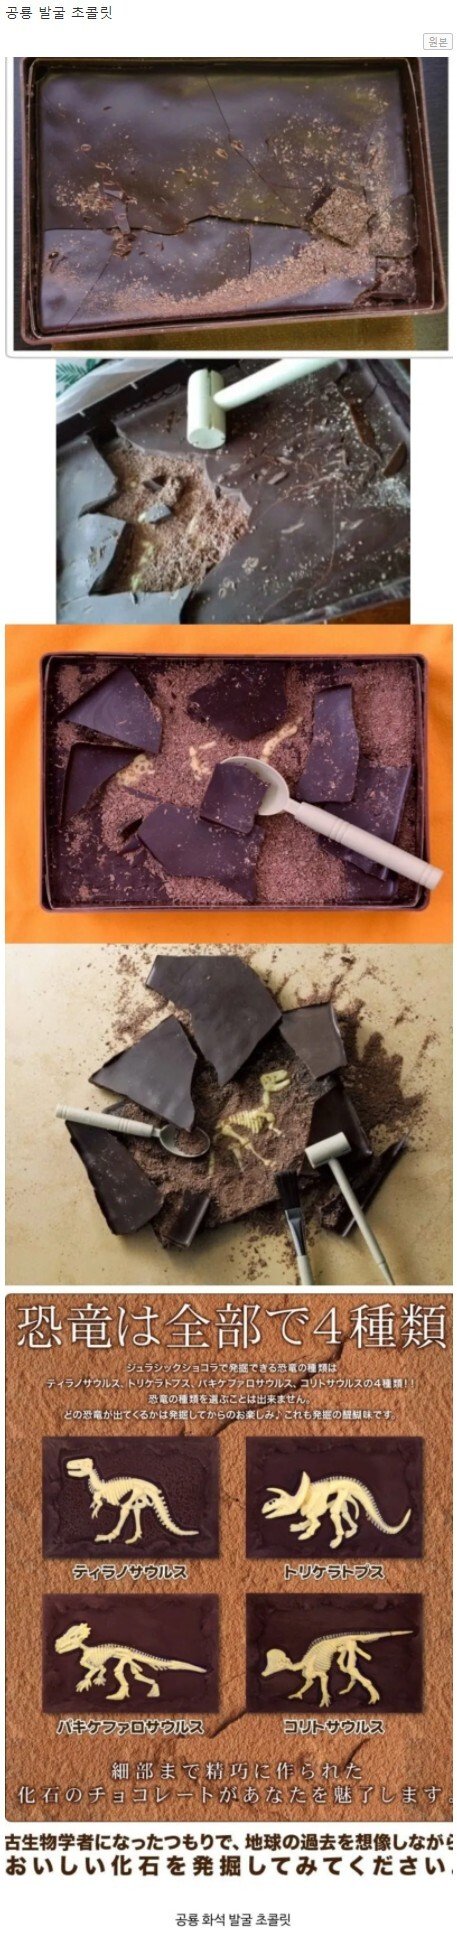 Japan's innovative chocolate.